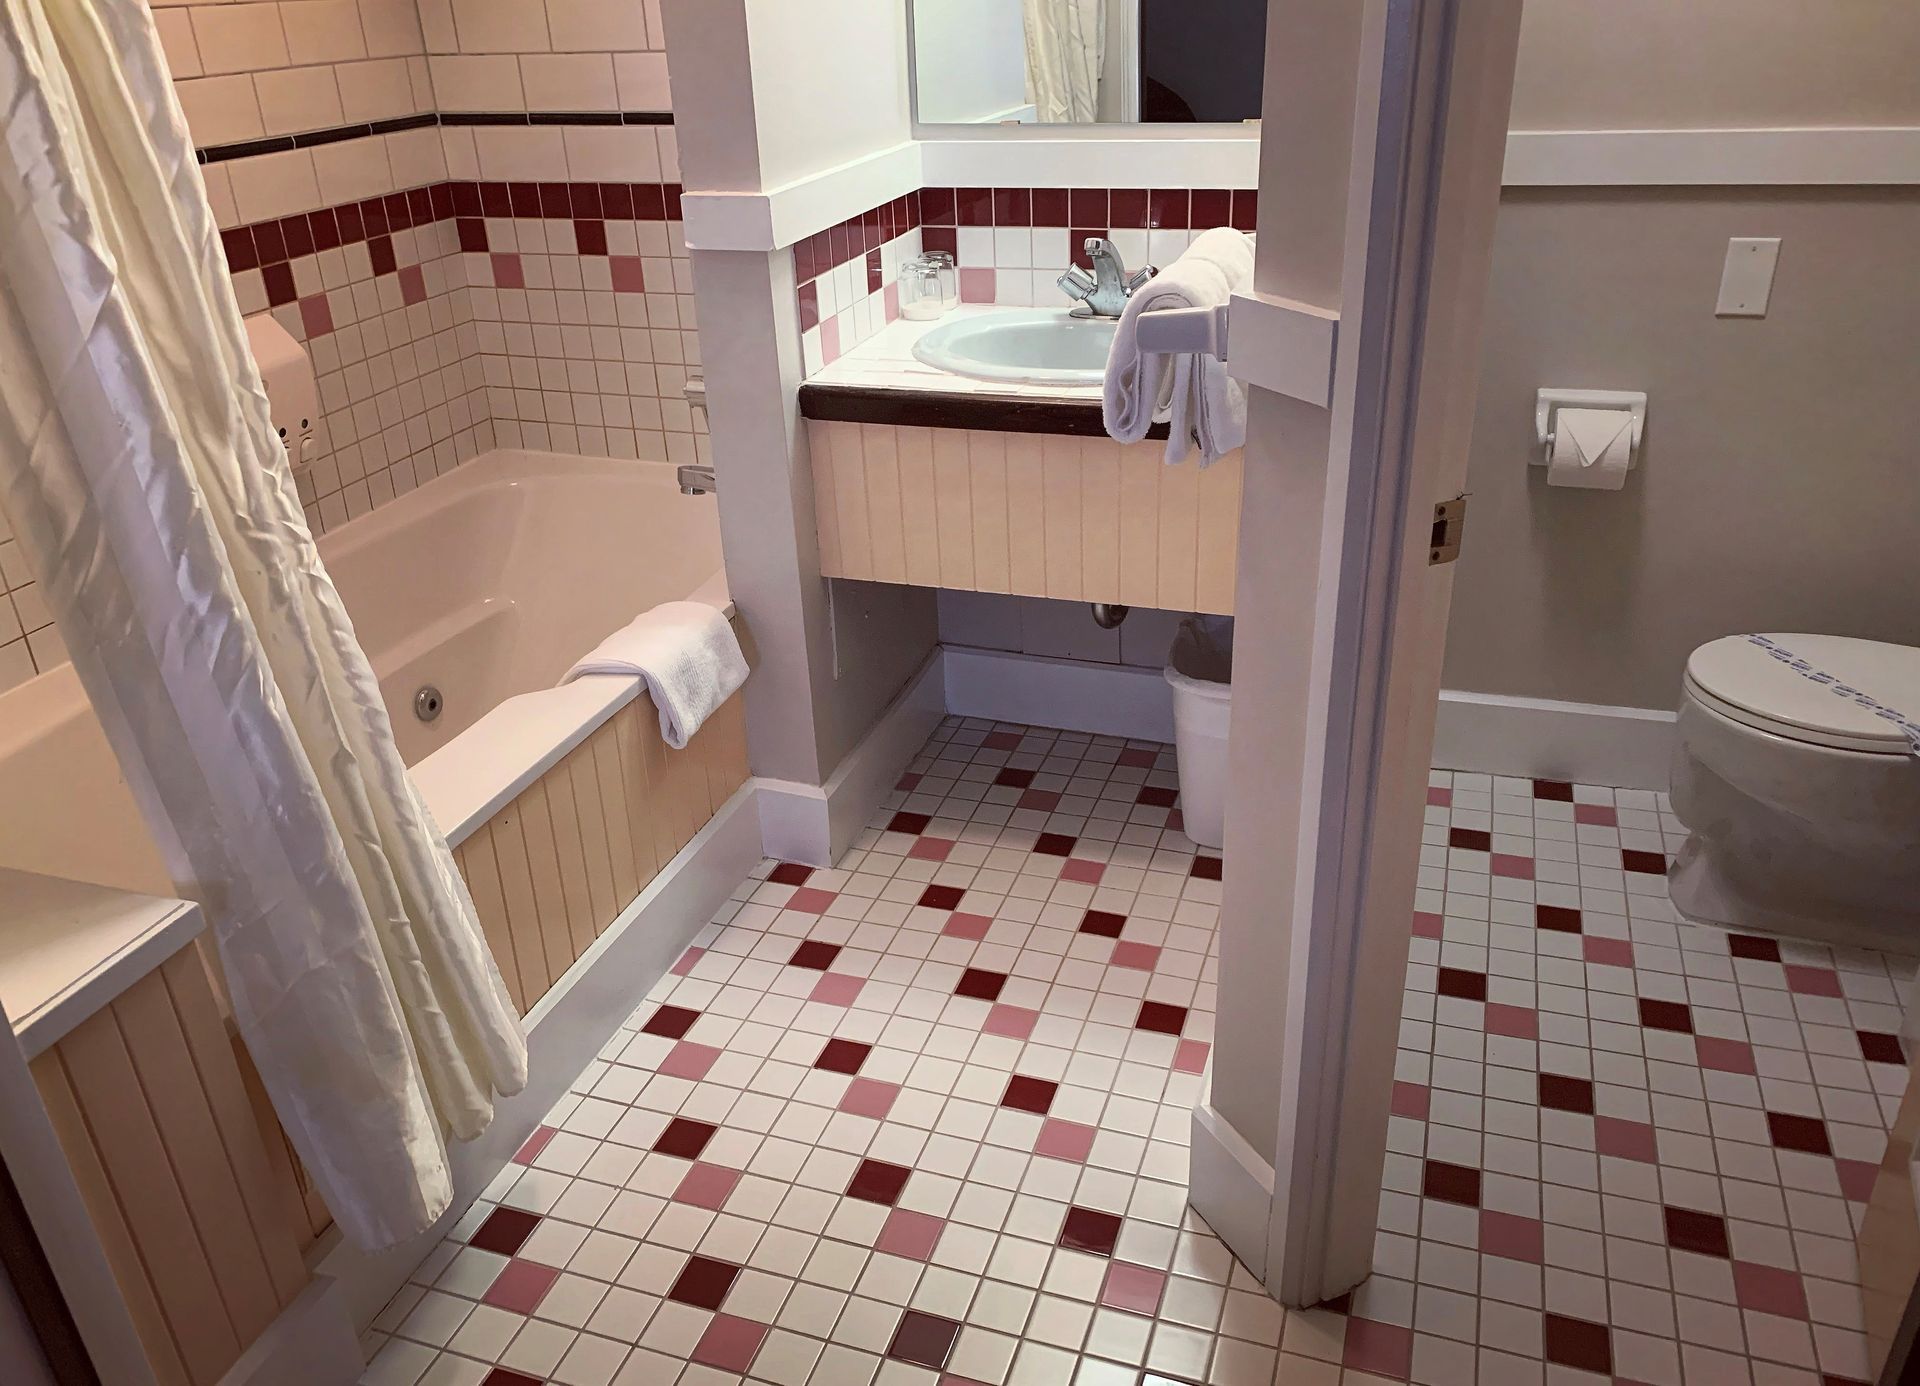 A bathroom with a bathtub a sink and a toilet